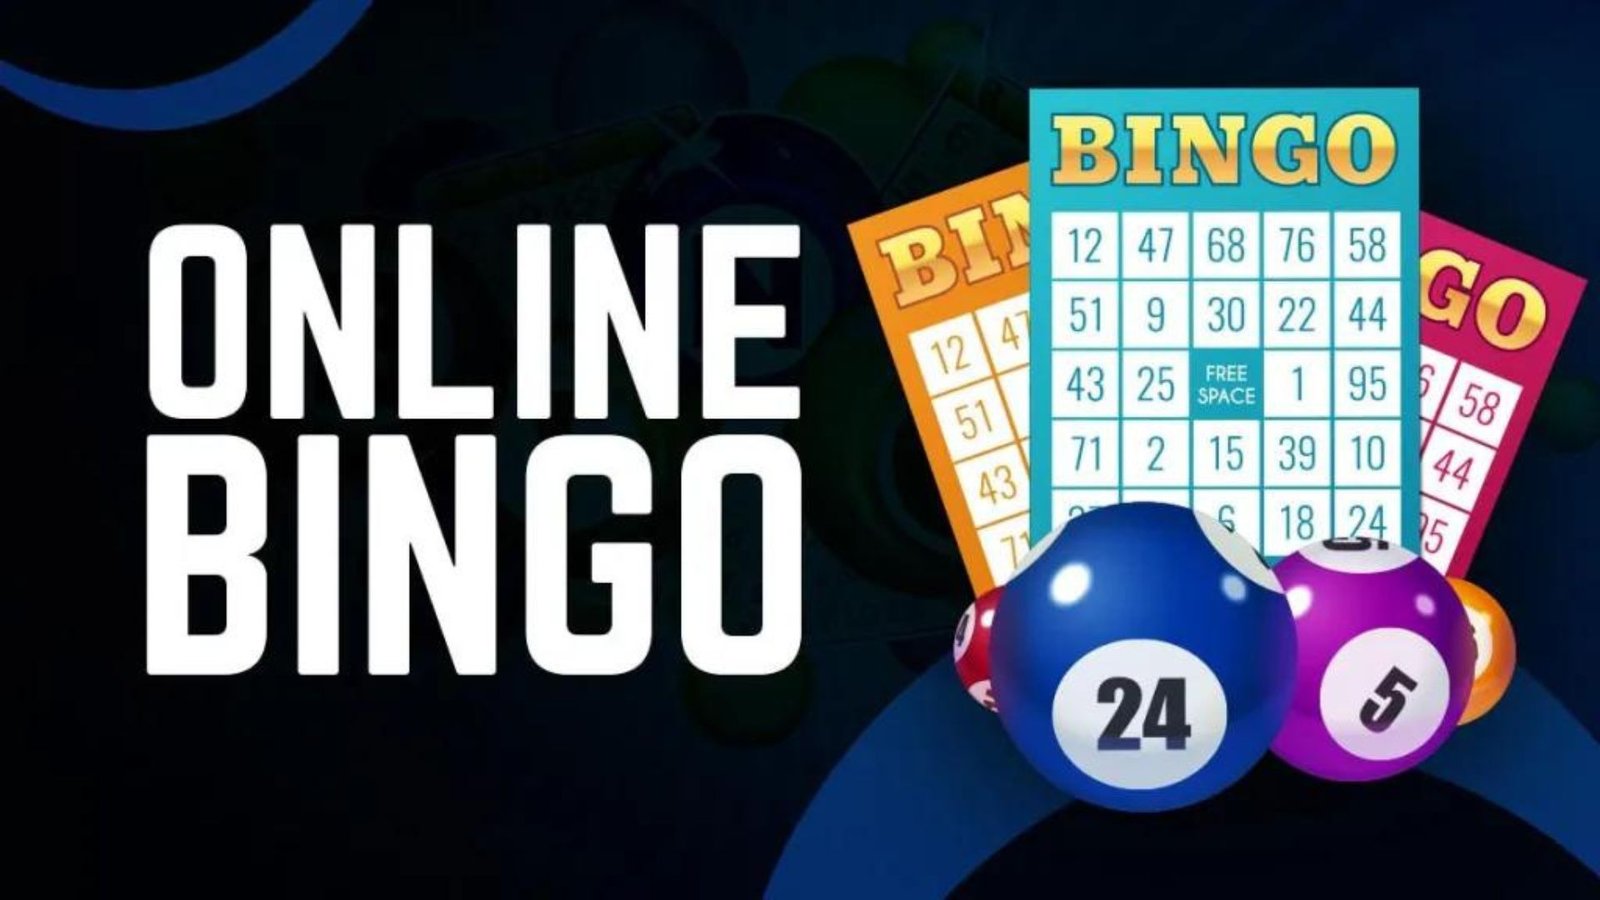 this image shows Online Bingo